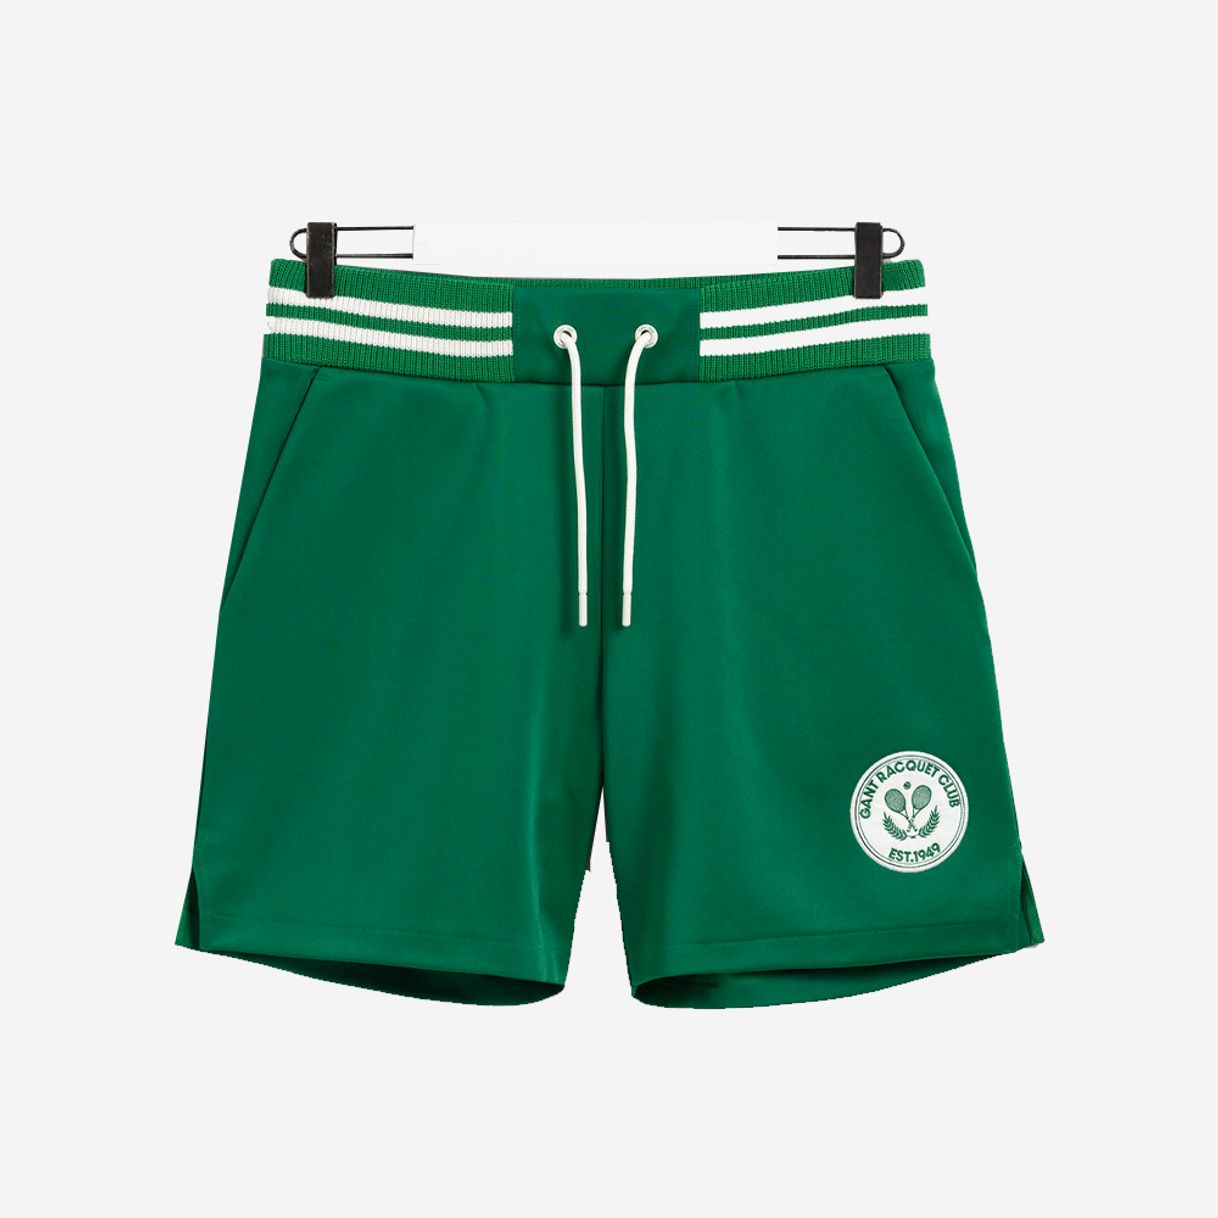 Gant ‘Racquet Club’ Sweat Shorts